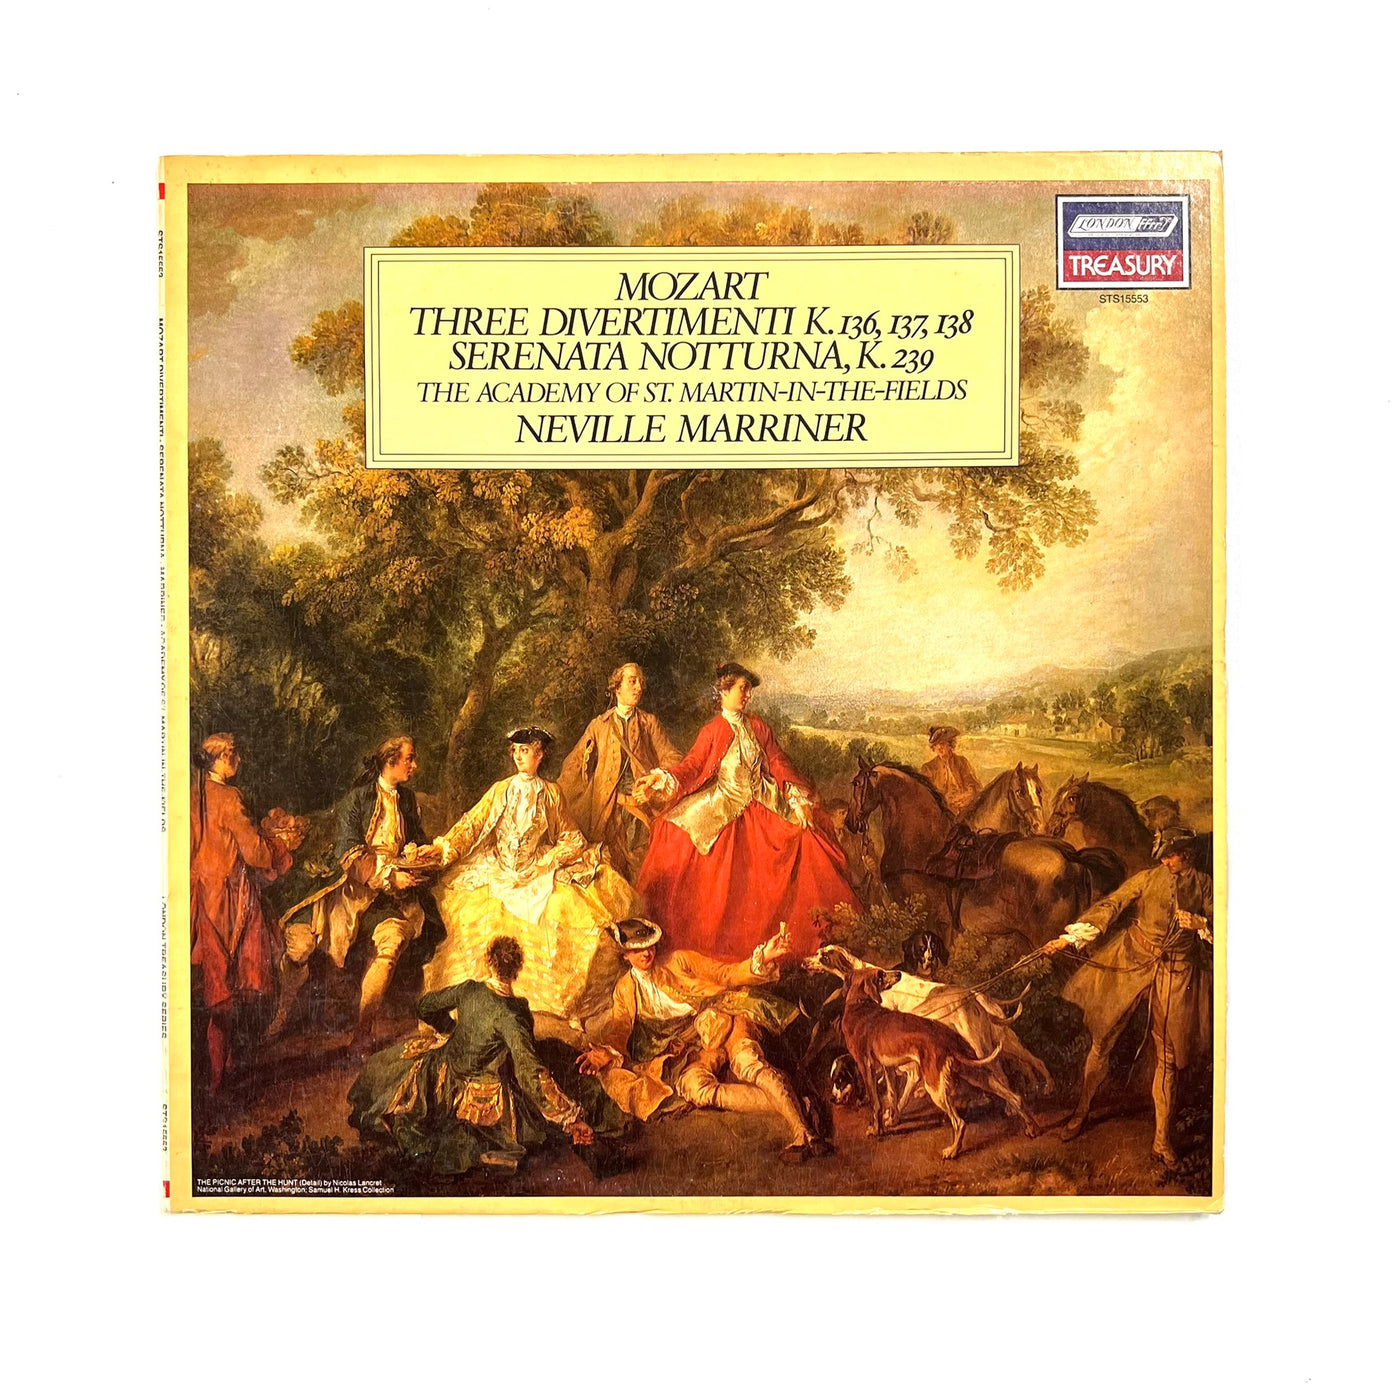 Wolfgang Amadeus Mozart - The Academy Of St. Martin-in-the-Fields - Sir Neville Marriner - Three Divertimenti K.136, 137, 138 - Serenata Notturna, K.239